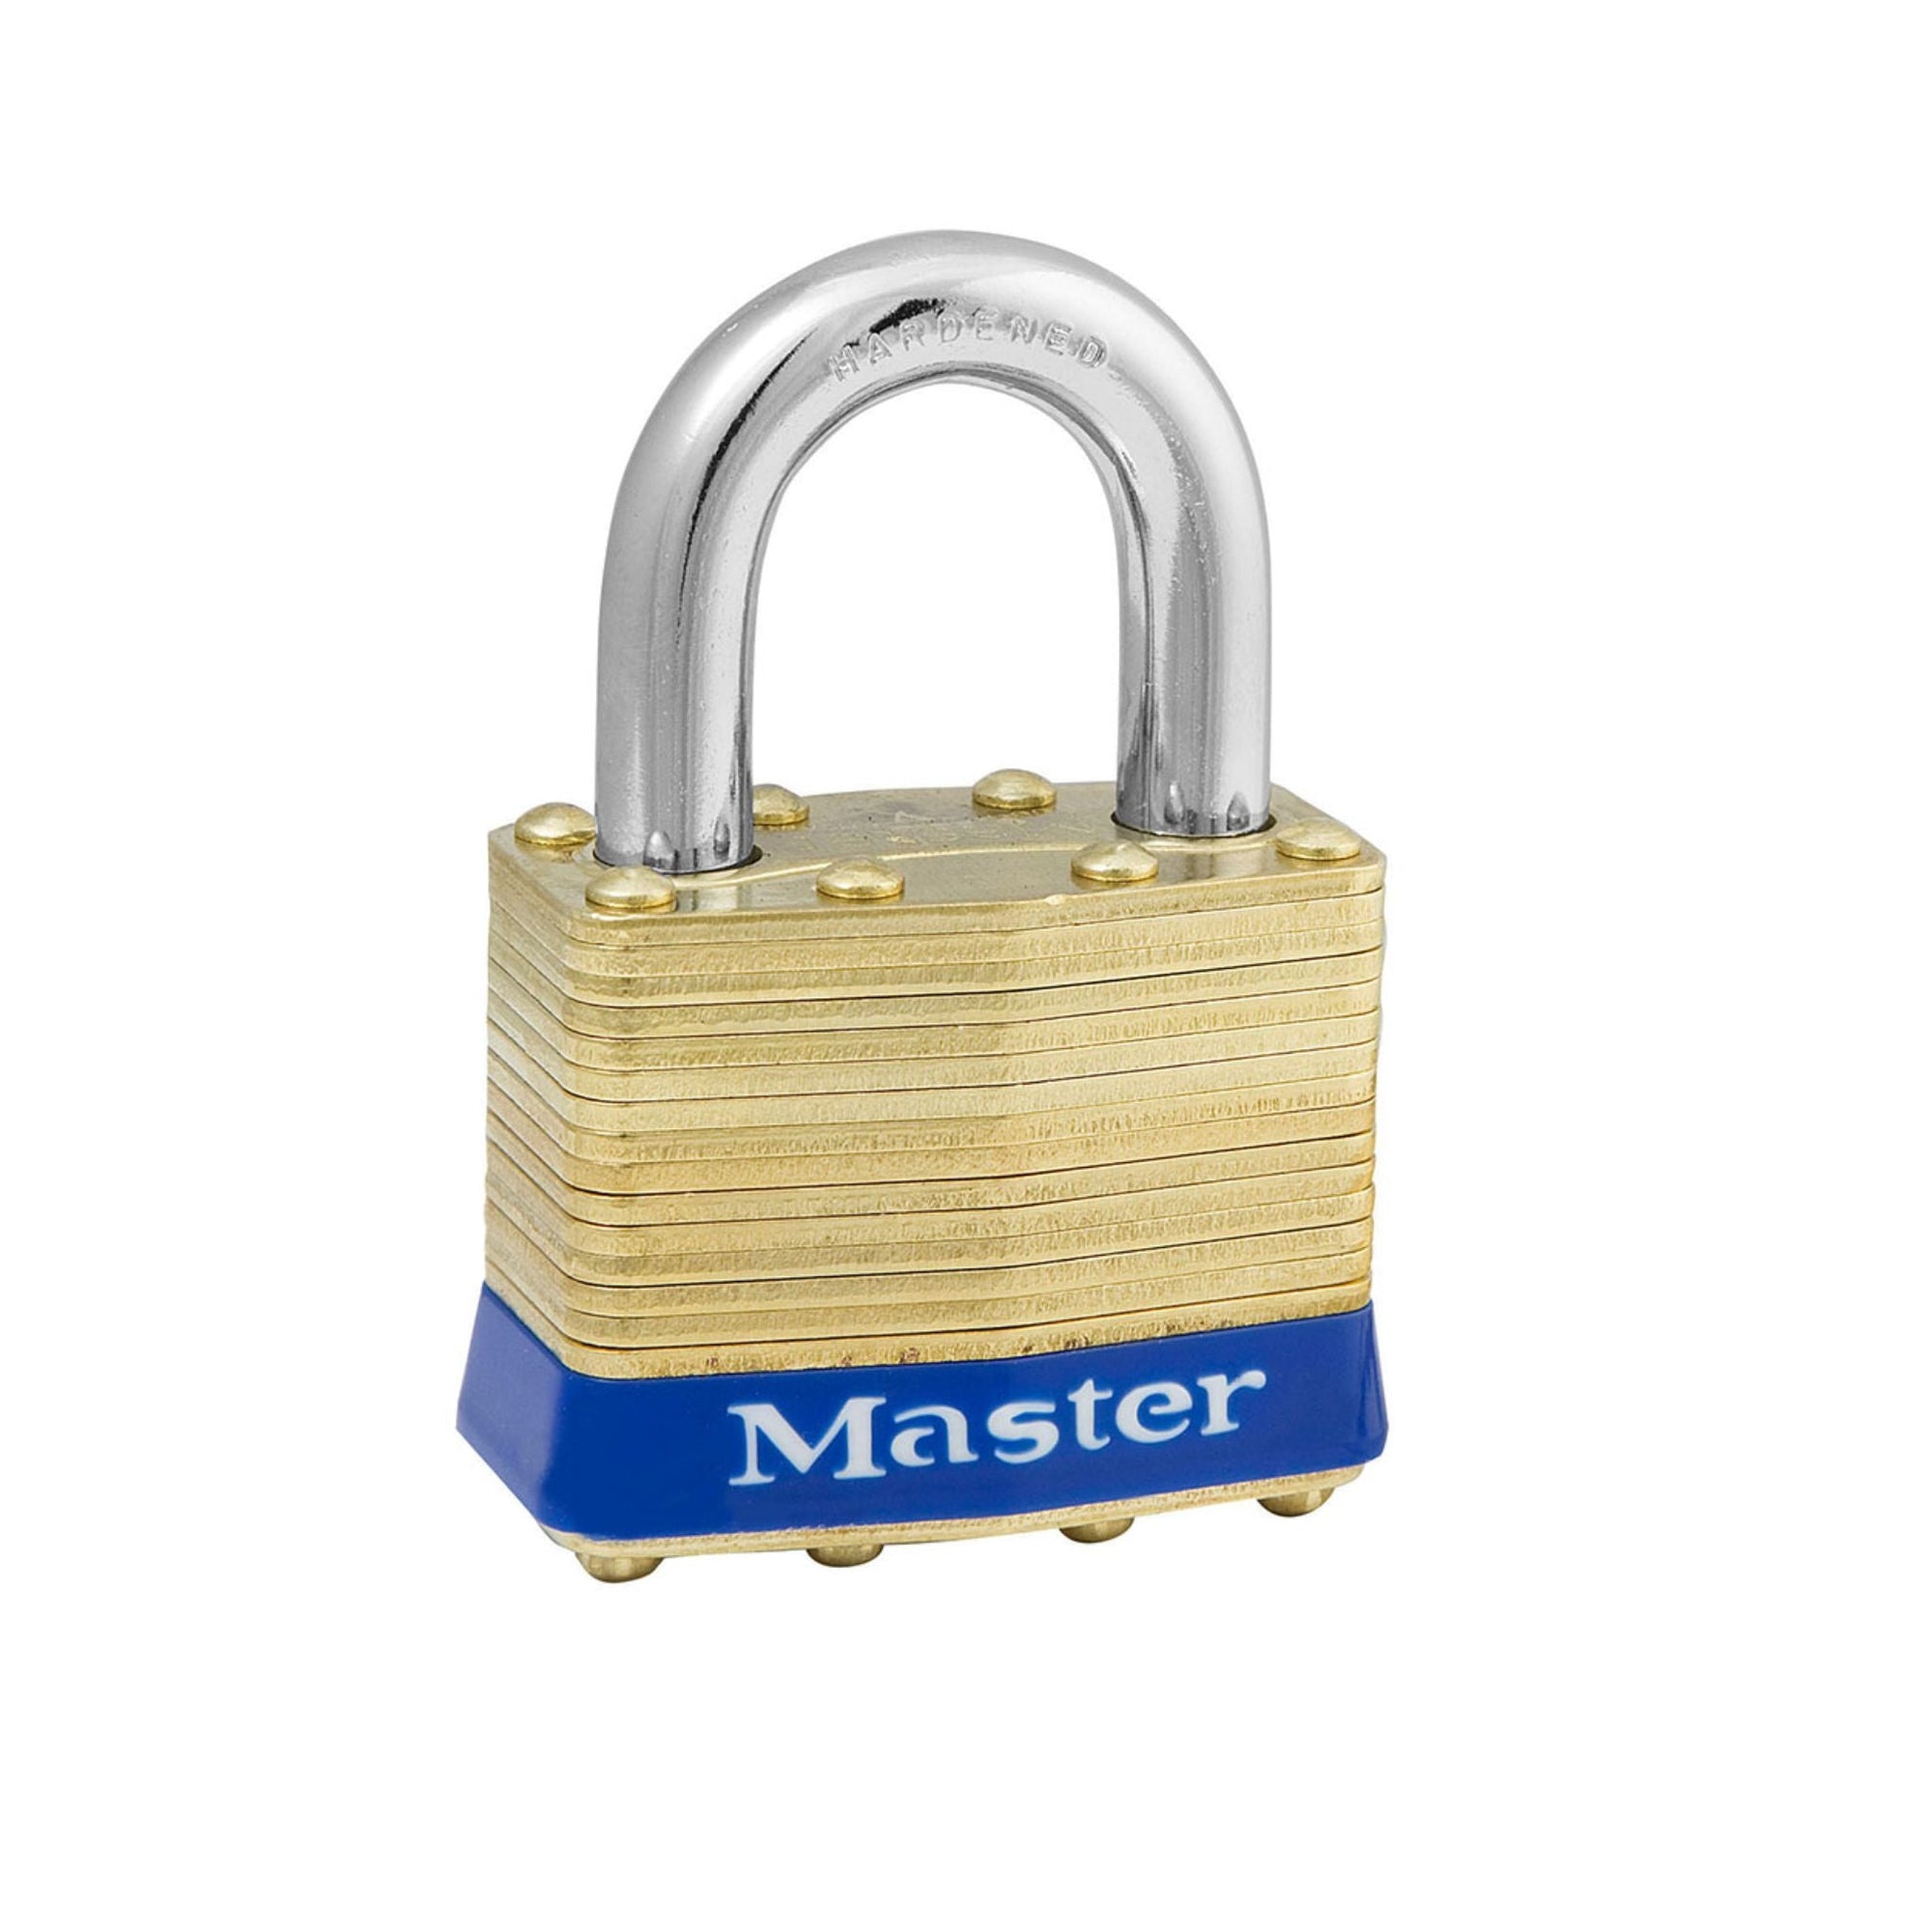 Master Lock 2KA 0310 Lock Laminated brass No. 2 Series Padlock Keyed to Match Existing Key Number KA0310 - The Lock Source